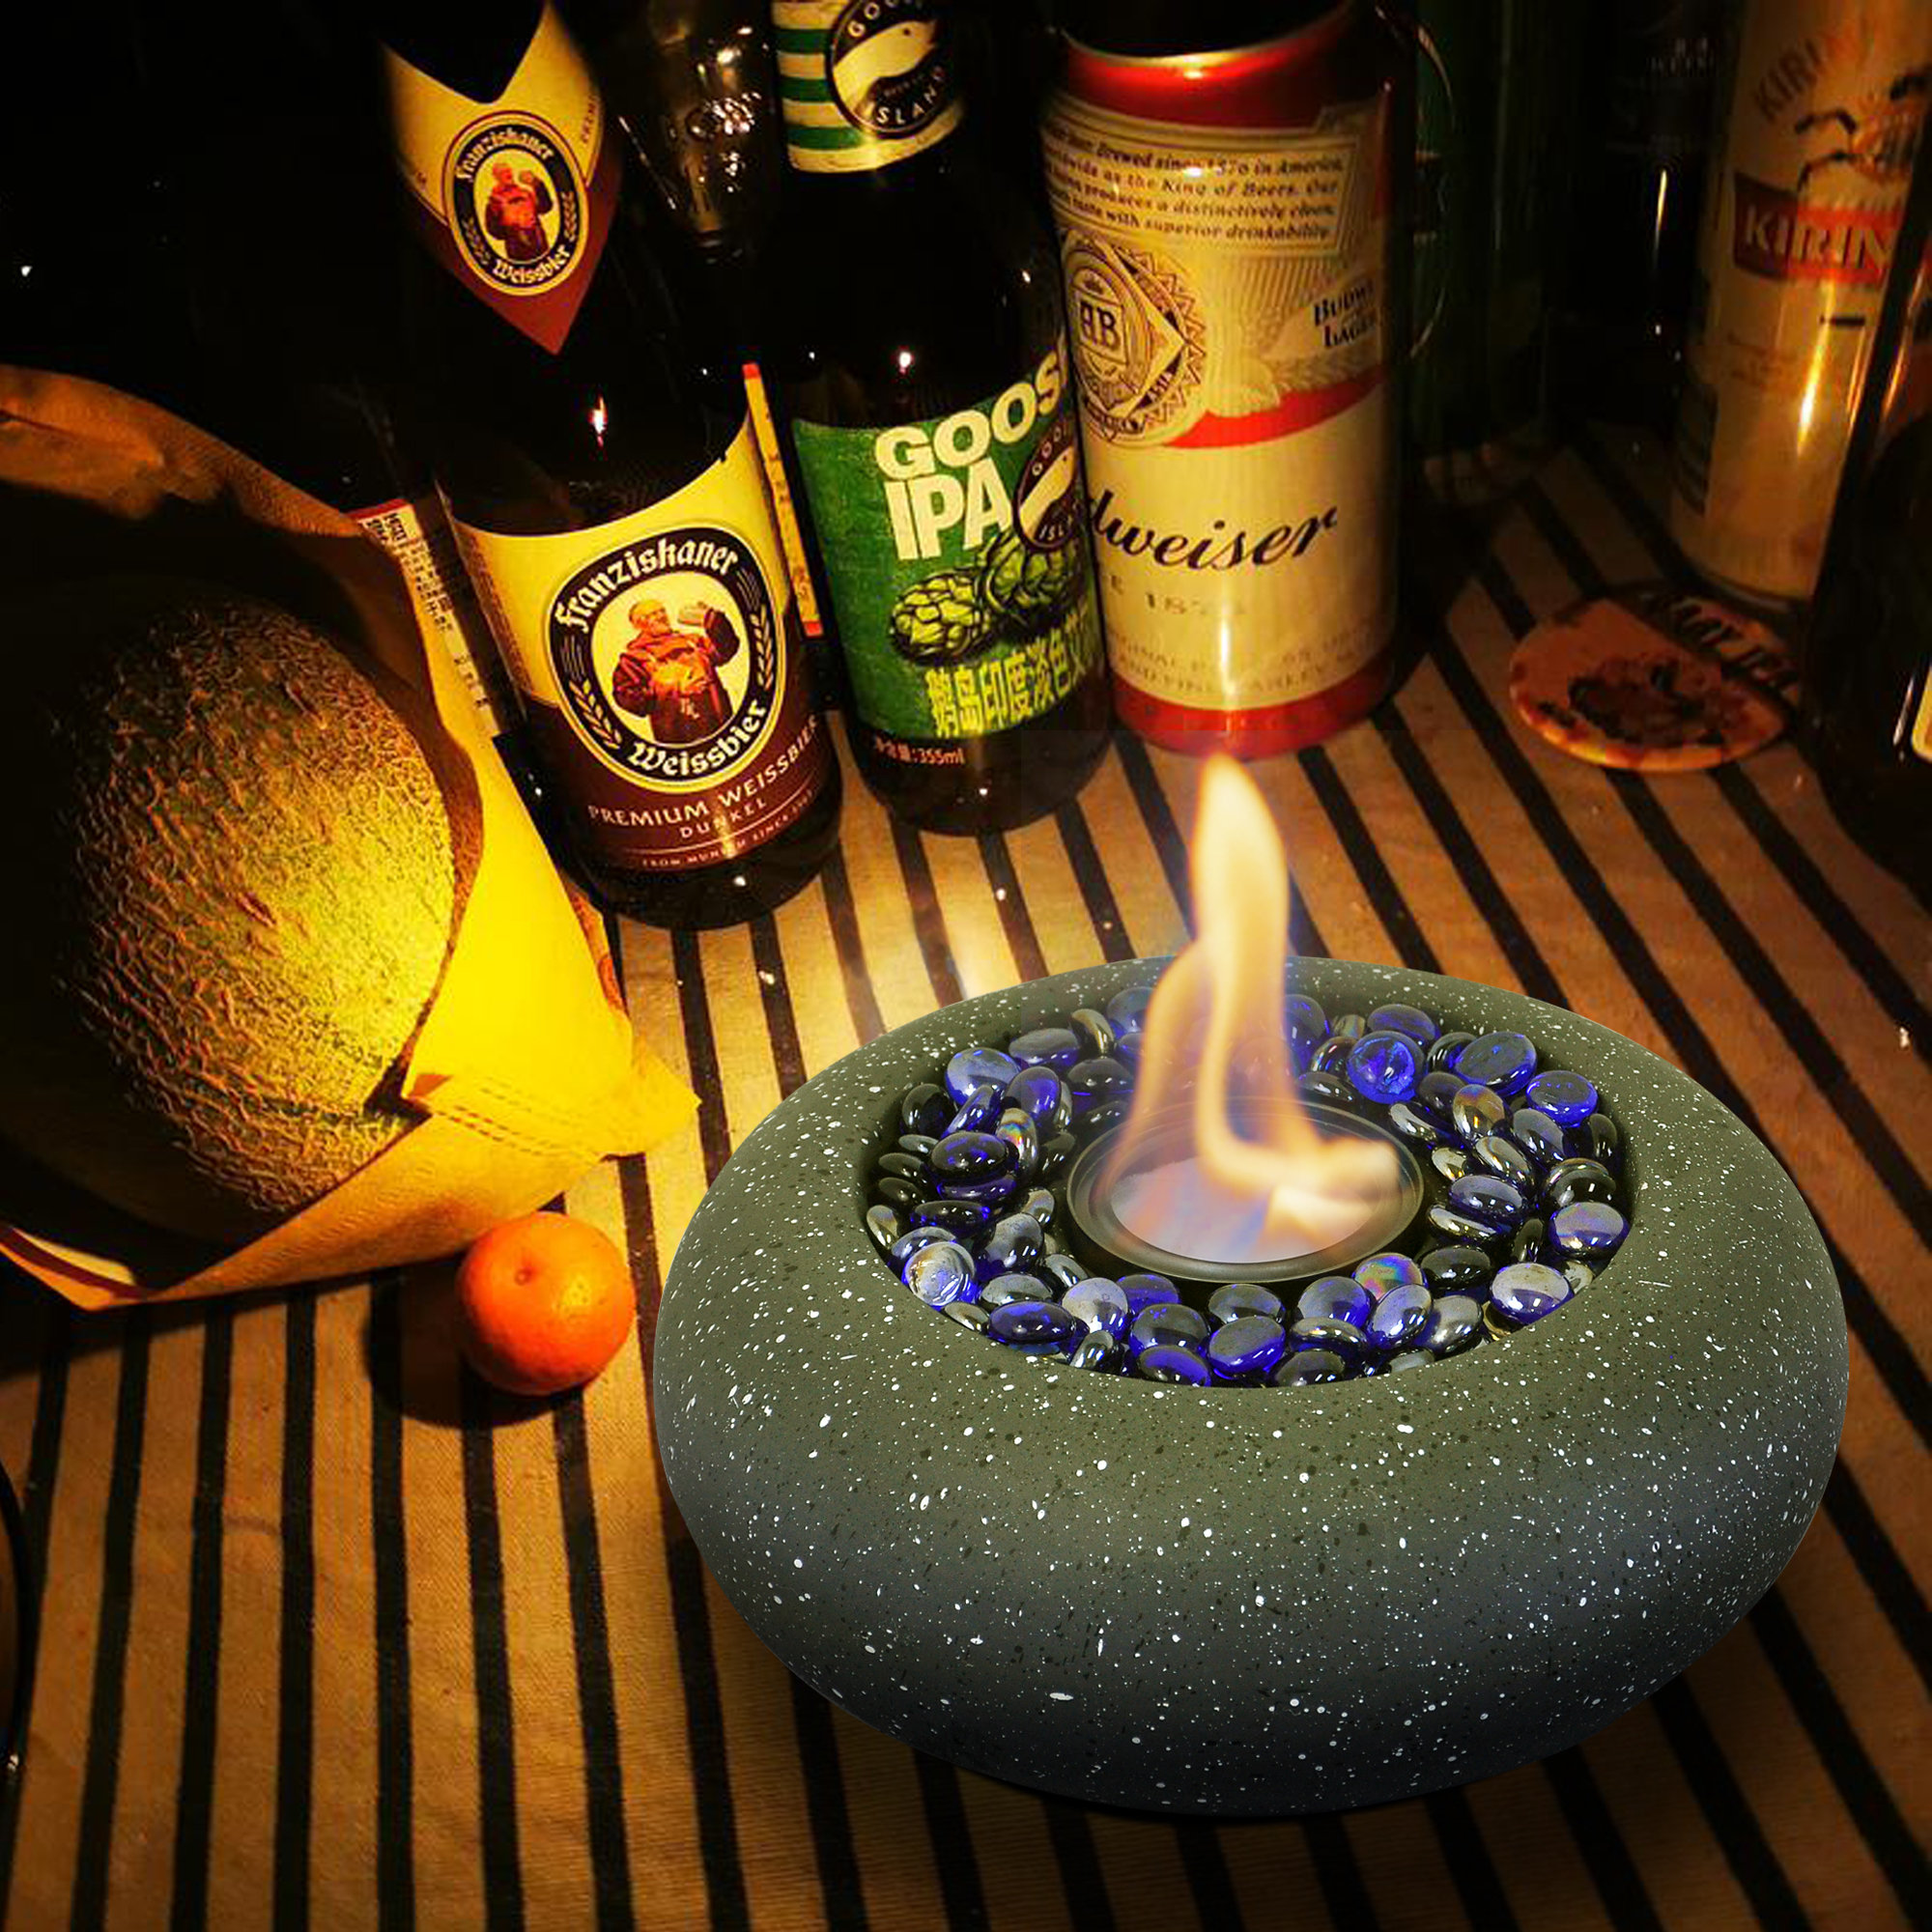 Greyhoo Stone Bio-Ethanol Outdoor Tabletop Fireplace